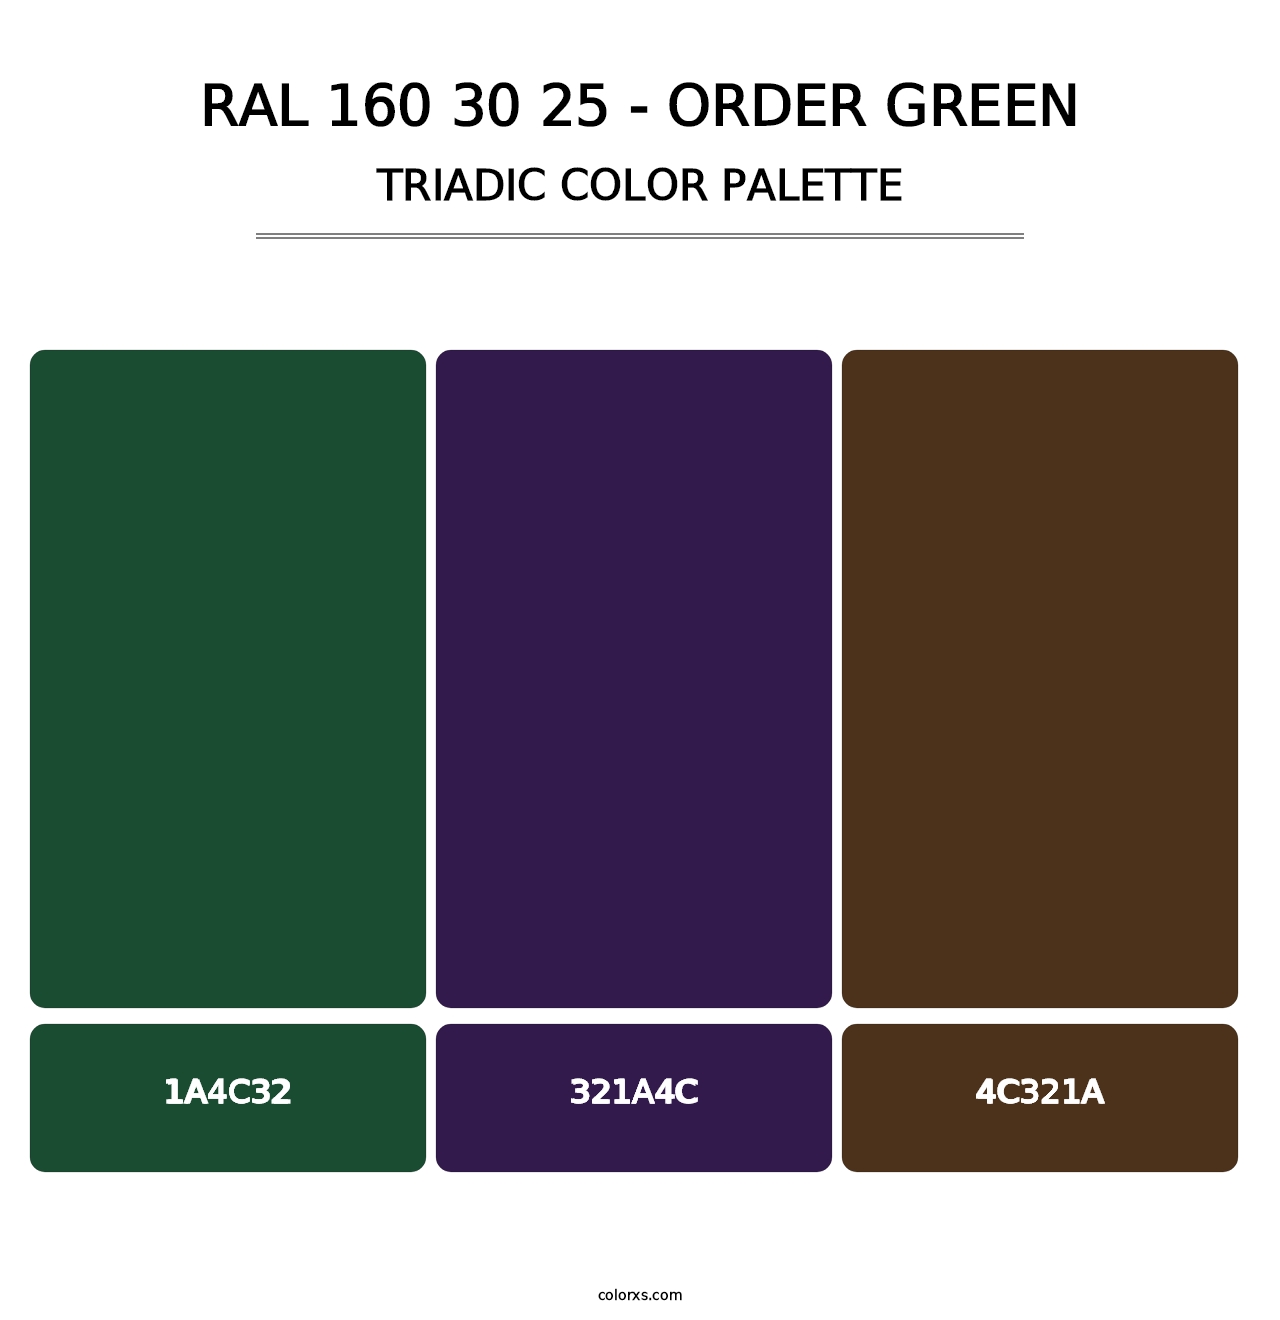 RAL 160 30 25 - Order Green - Triadic Color Palette